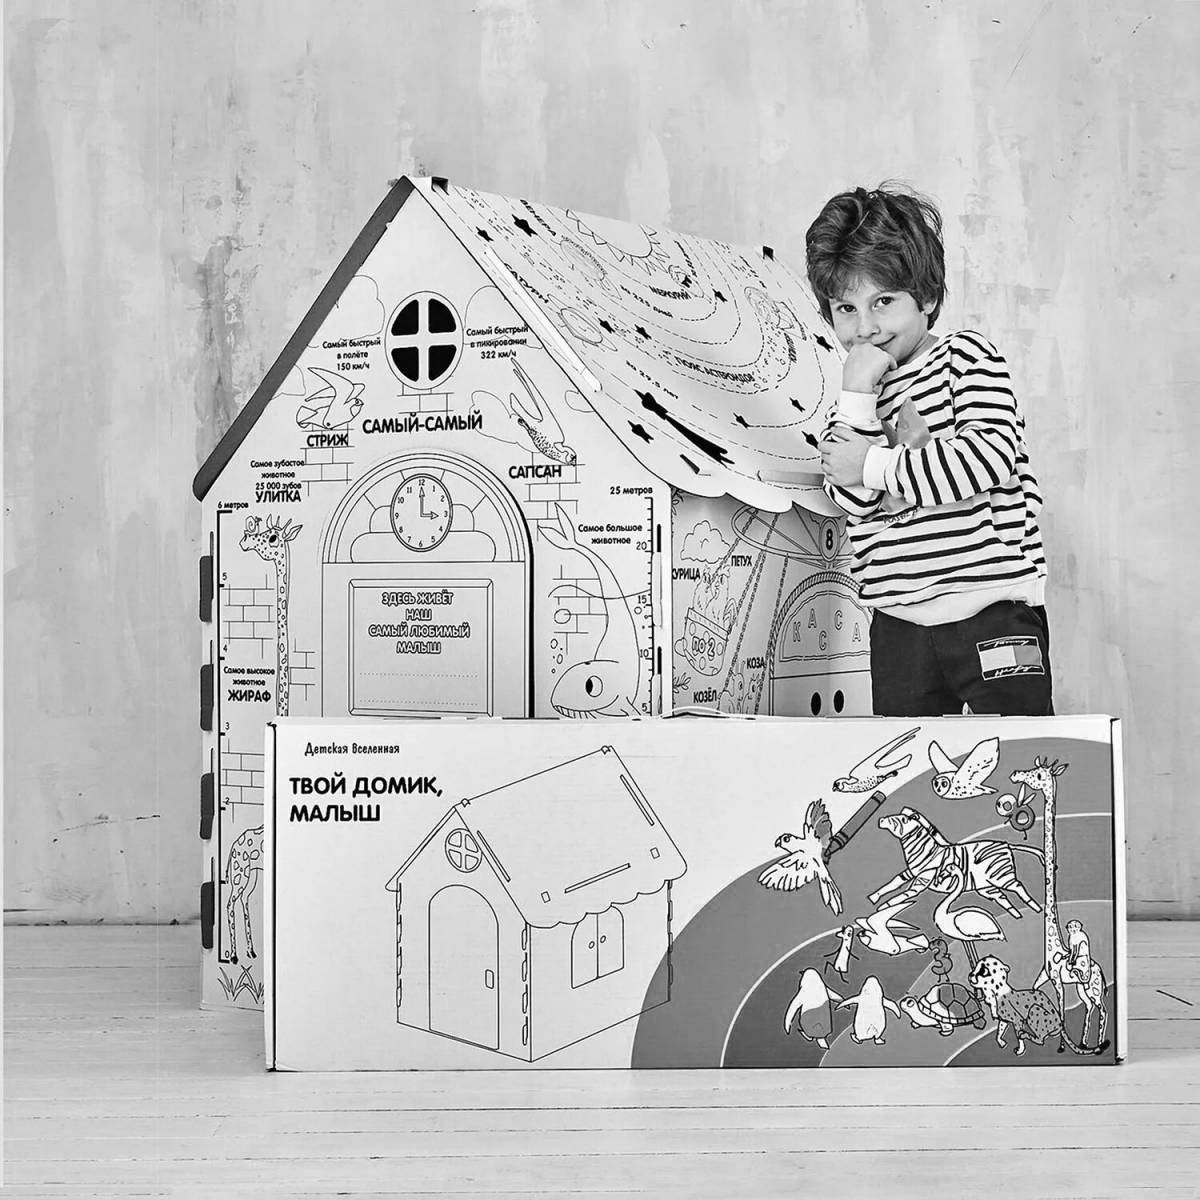 Cardboard playhouse #9